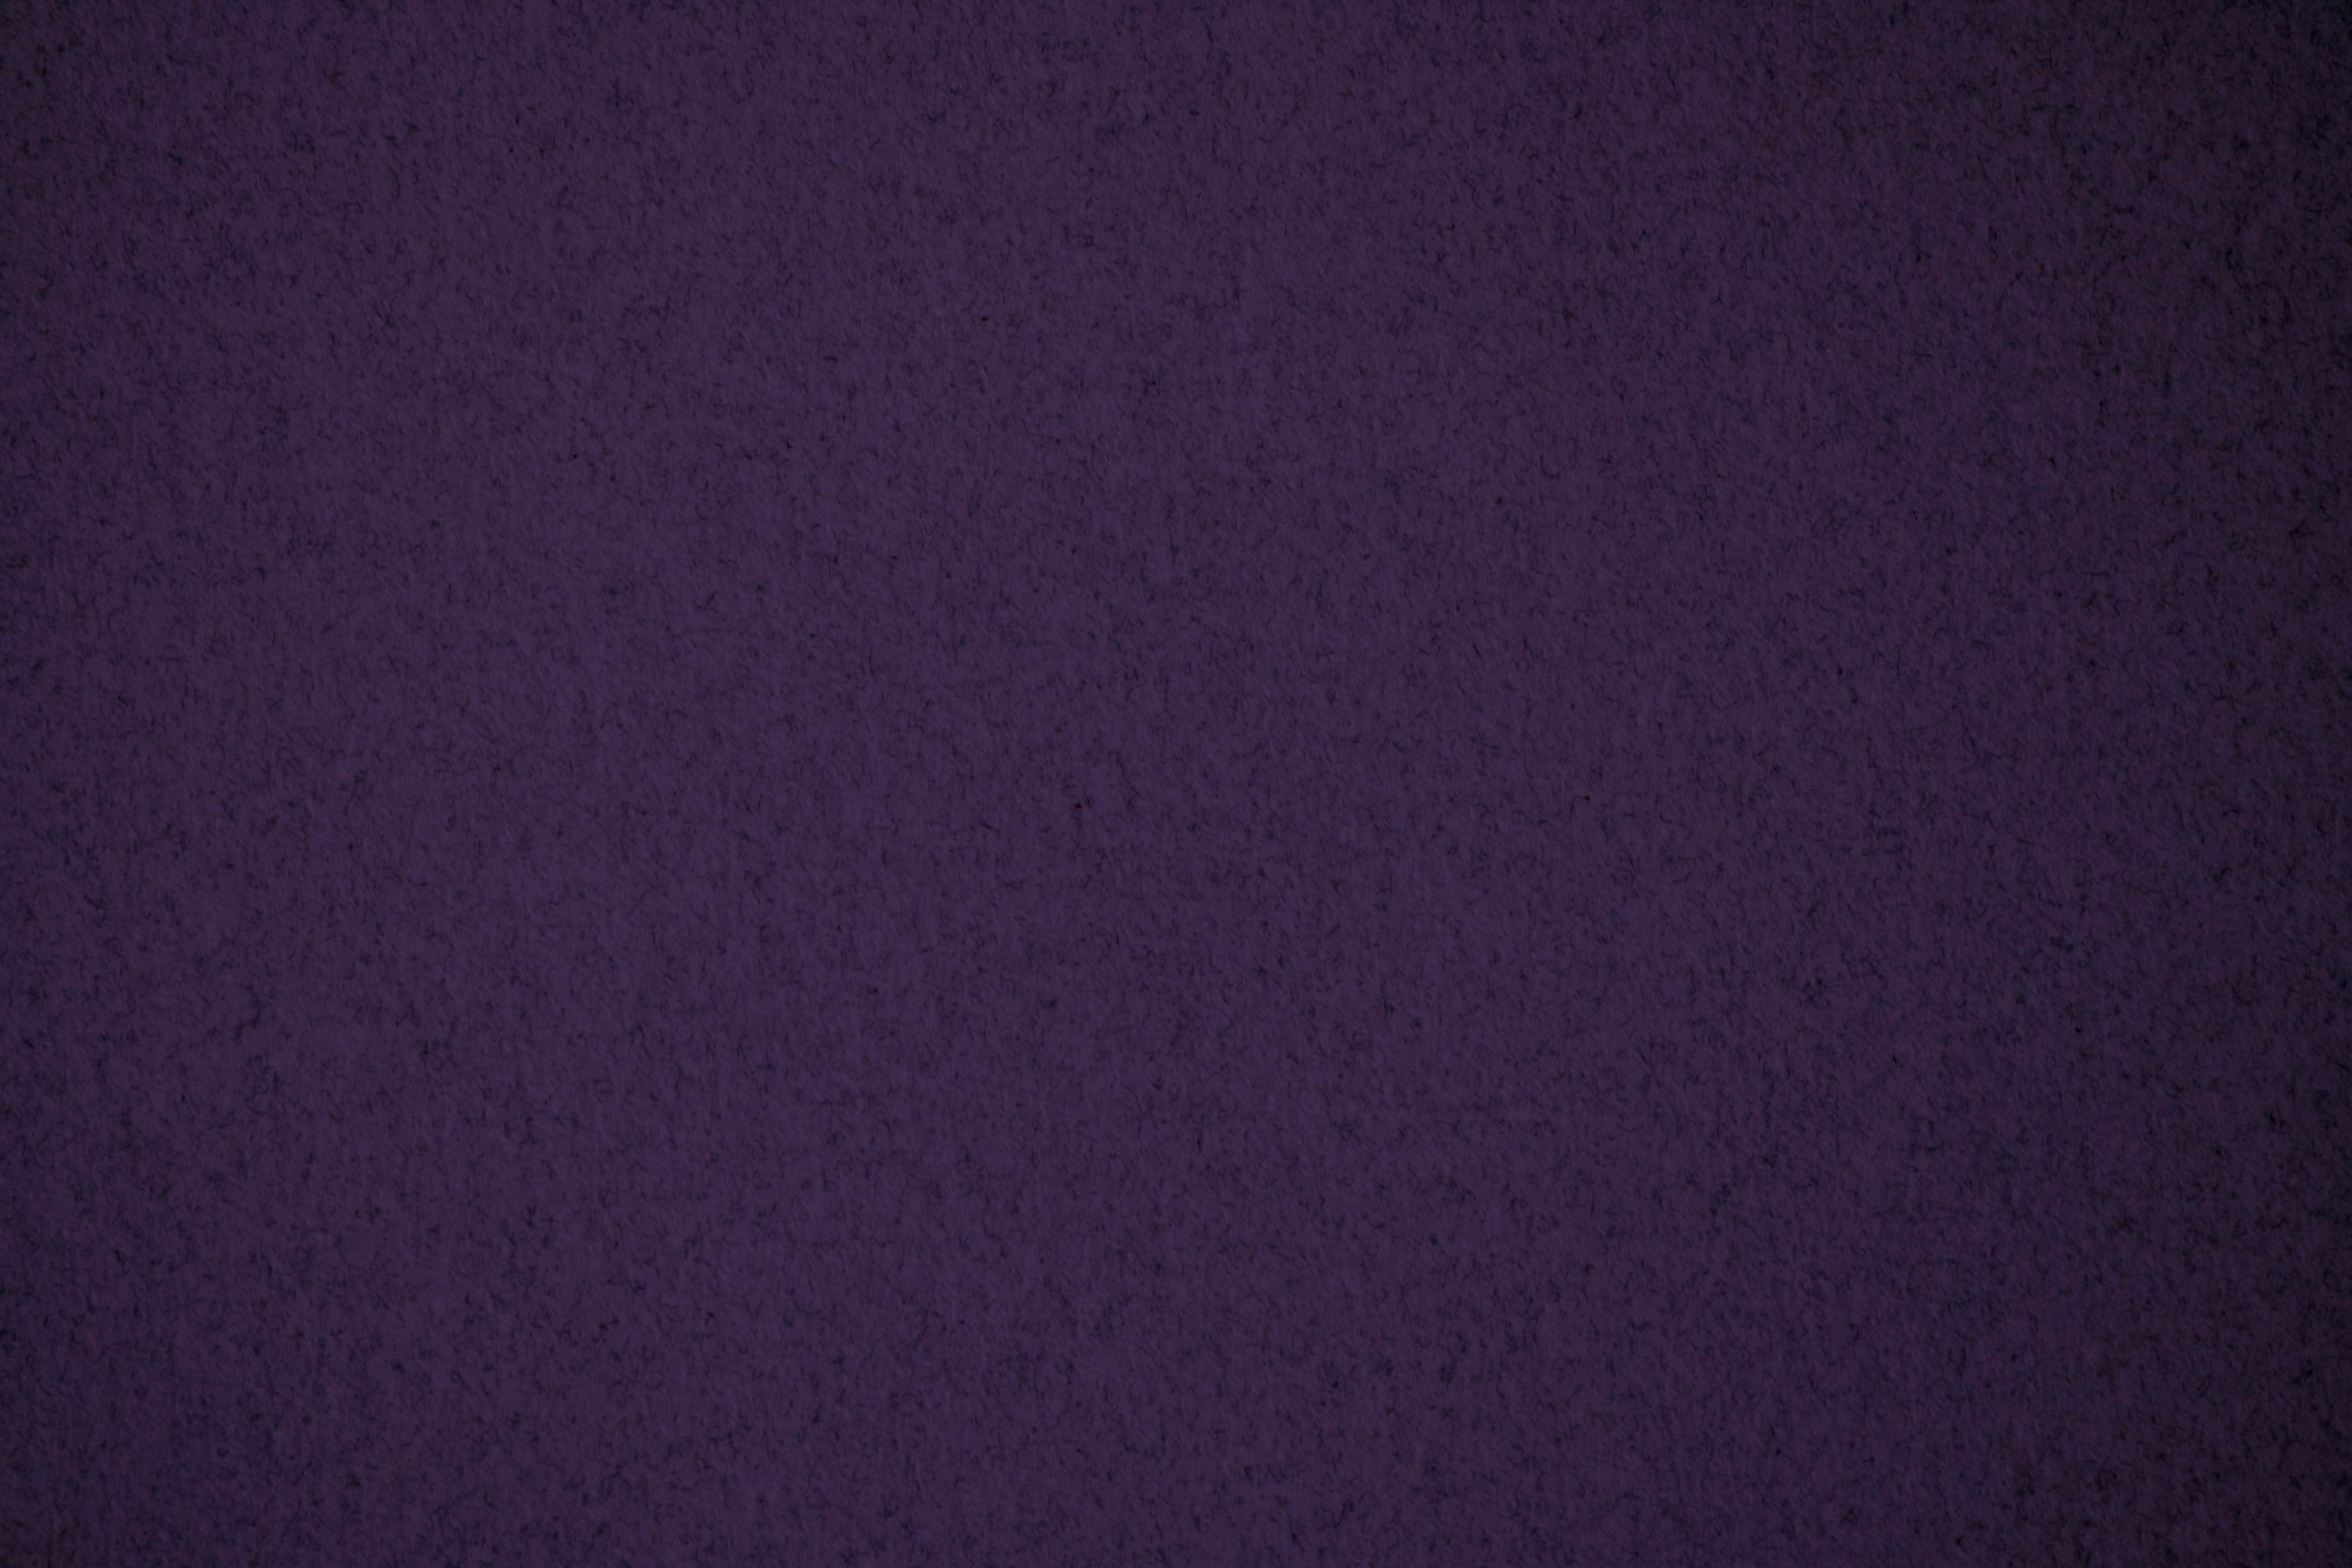 Dark Purple and Black Texture